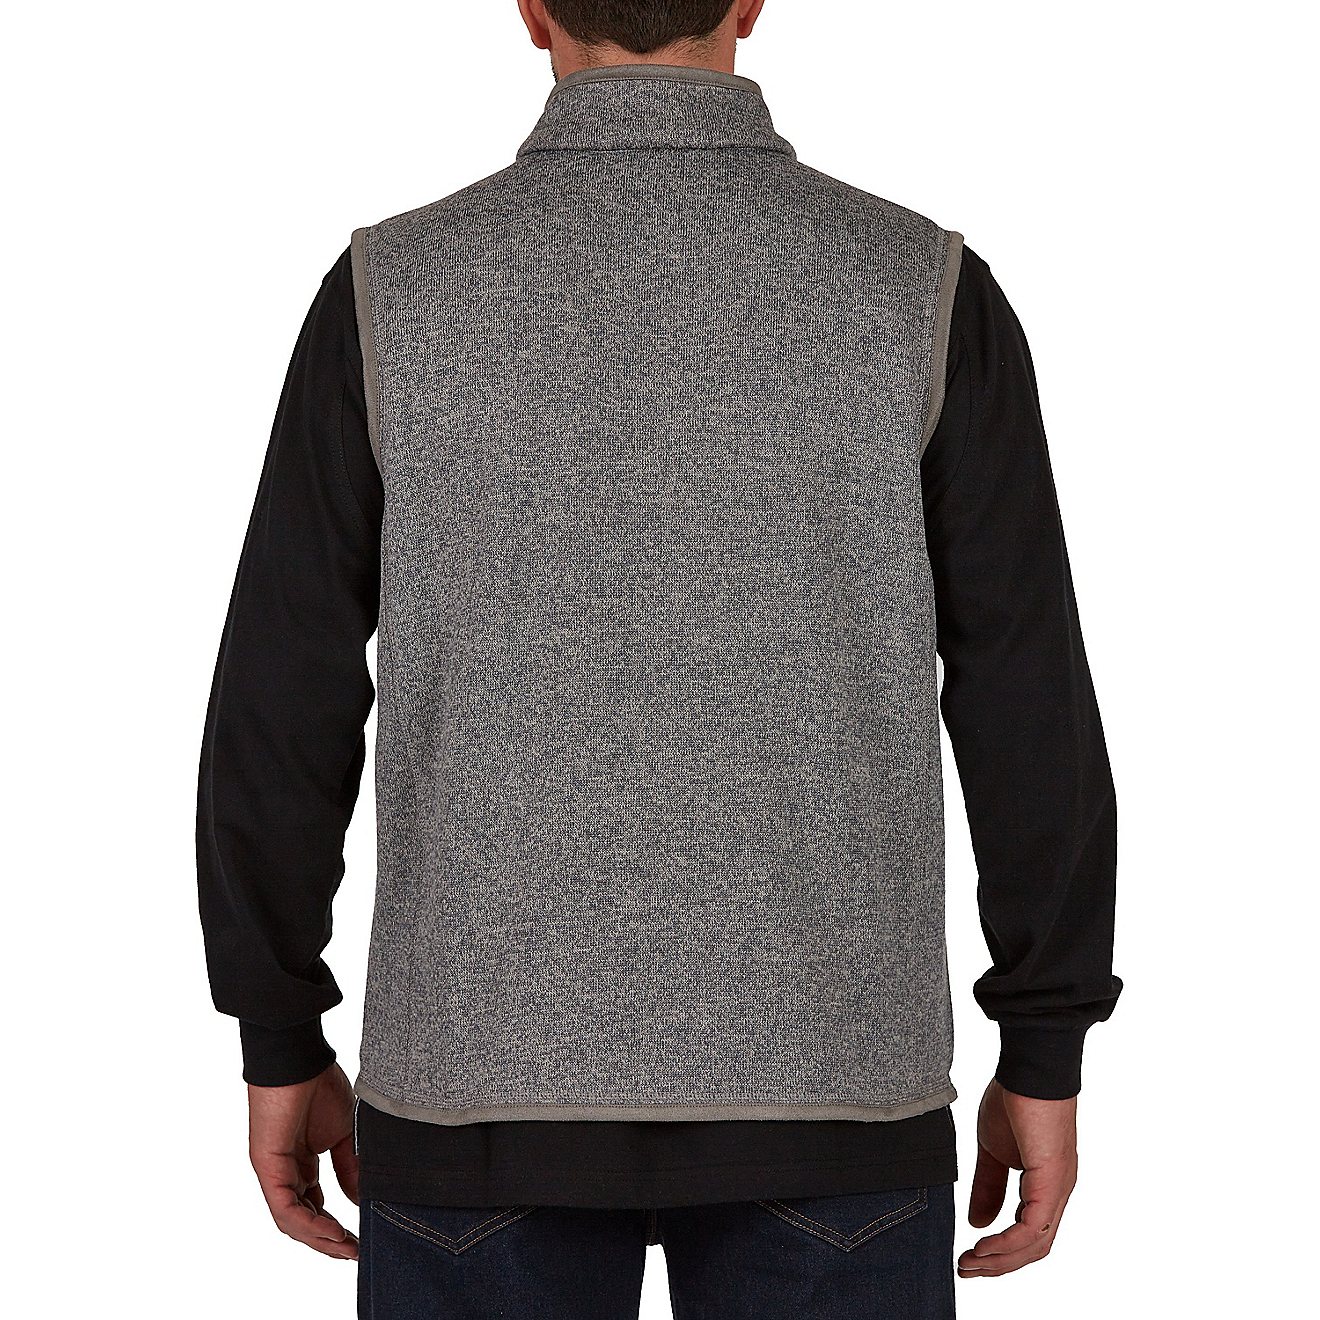 Smith's Workwear Men's Sherpa Lined Sweater Fleece Vest                                                                          - view number 2